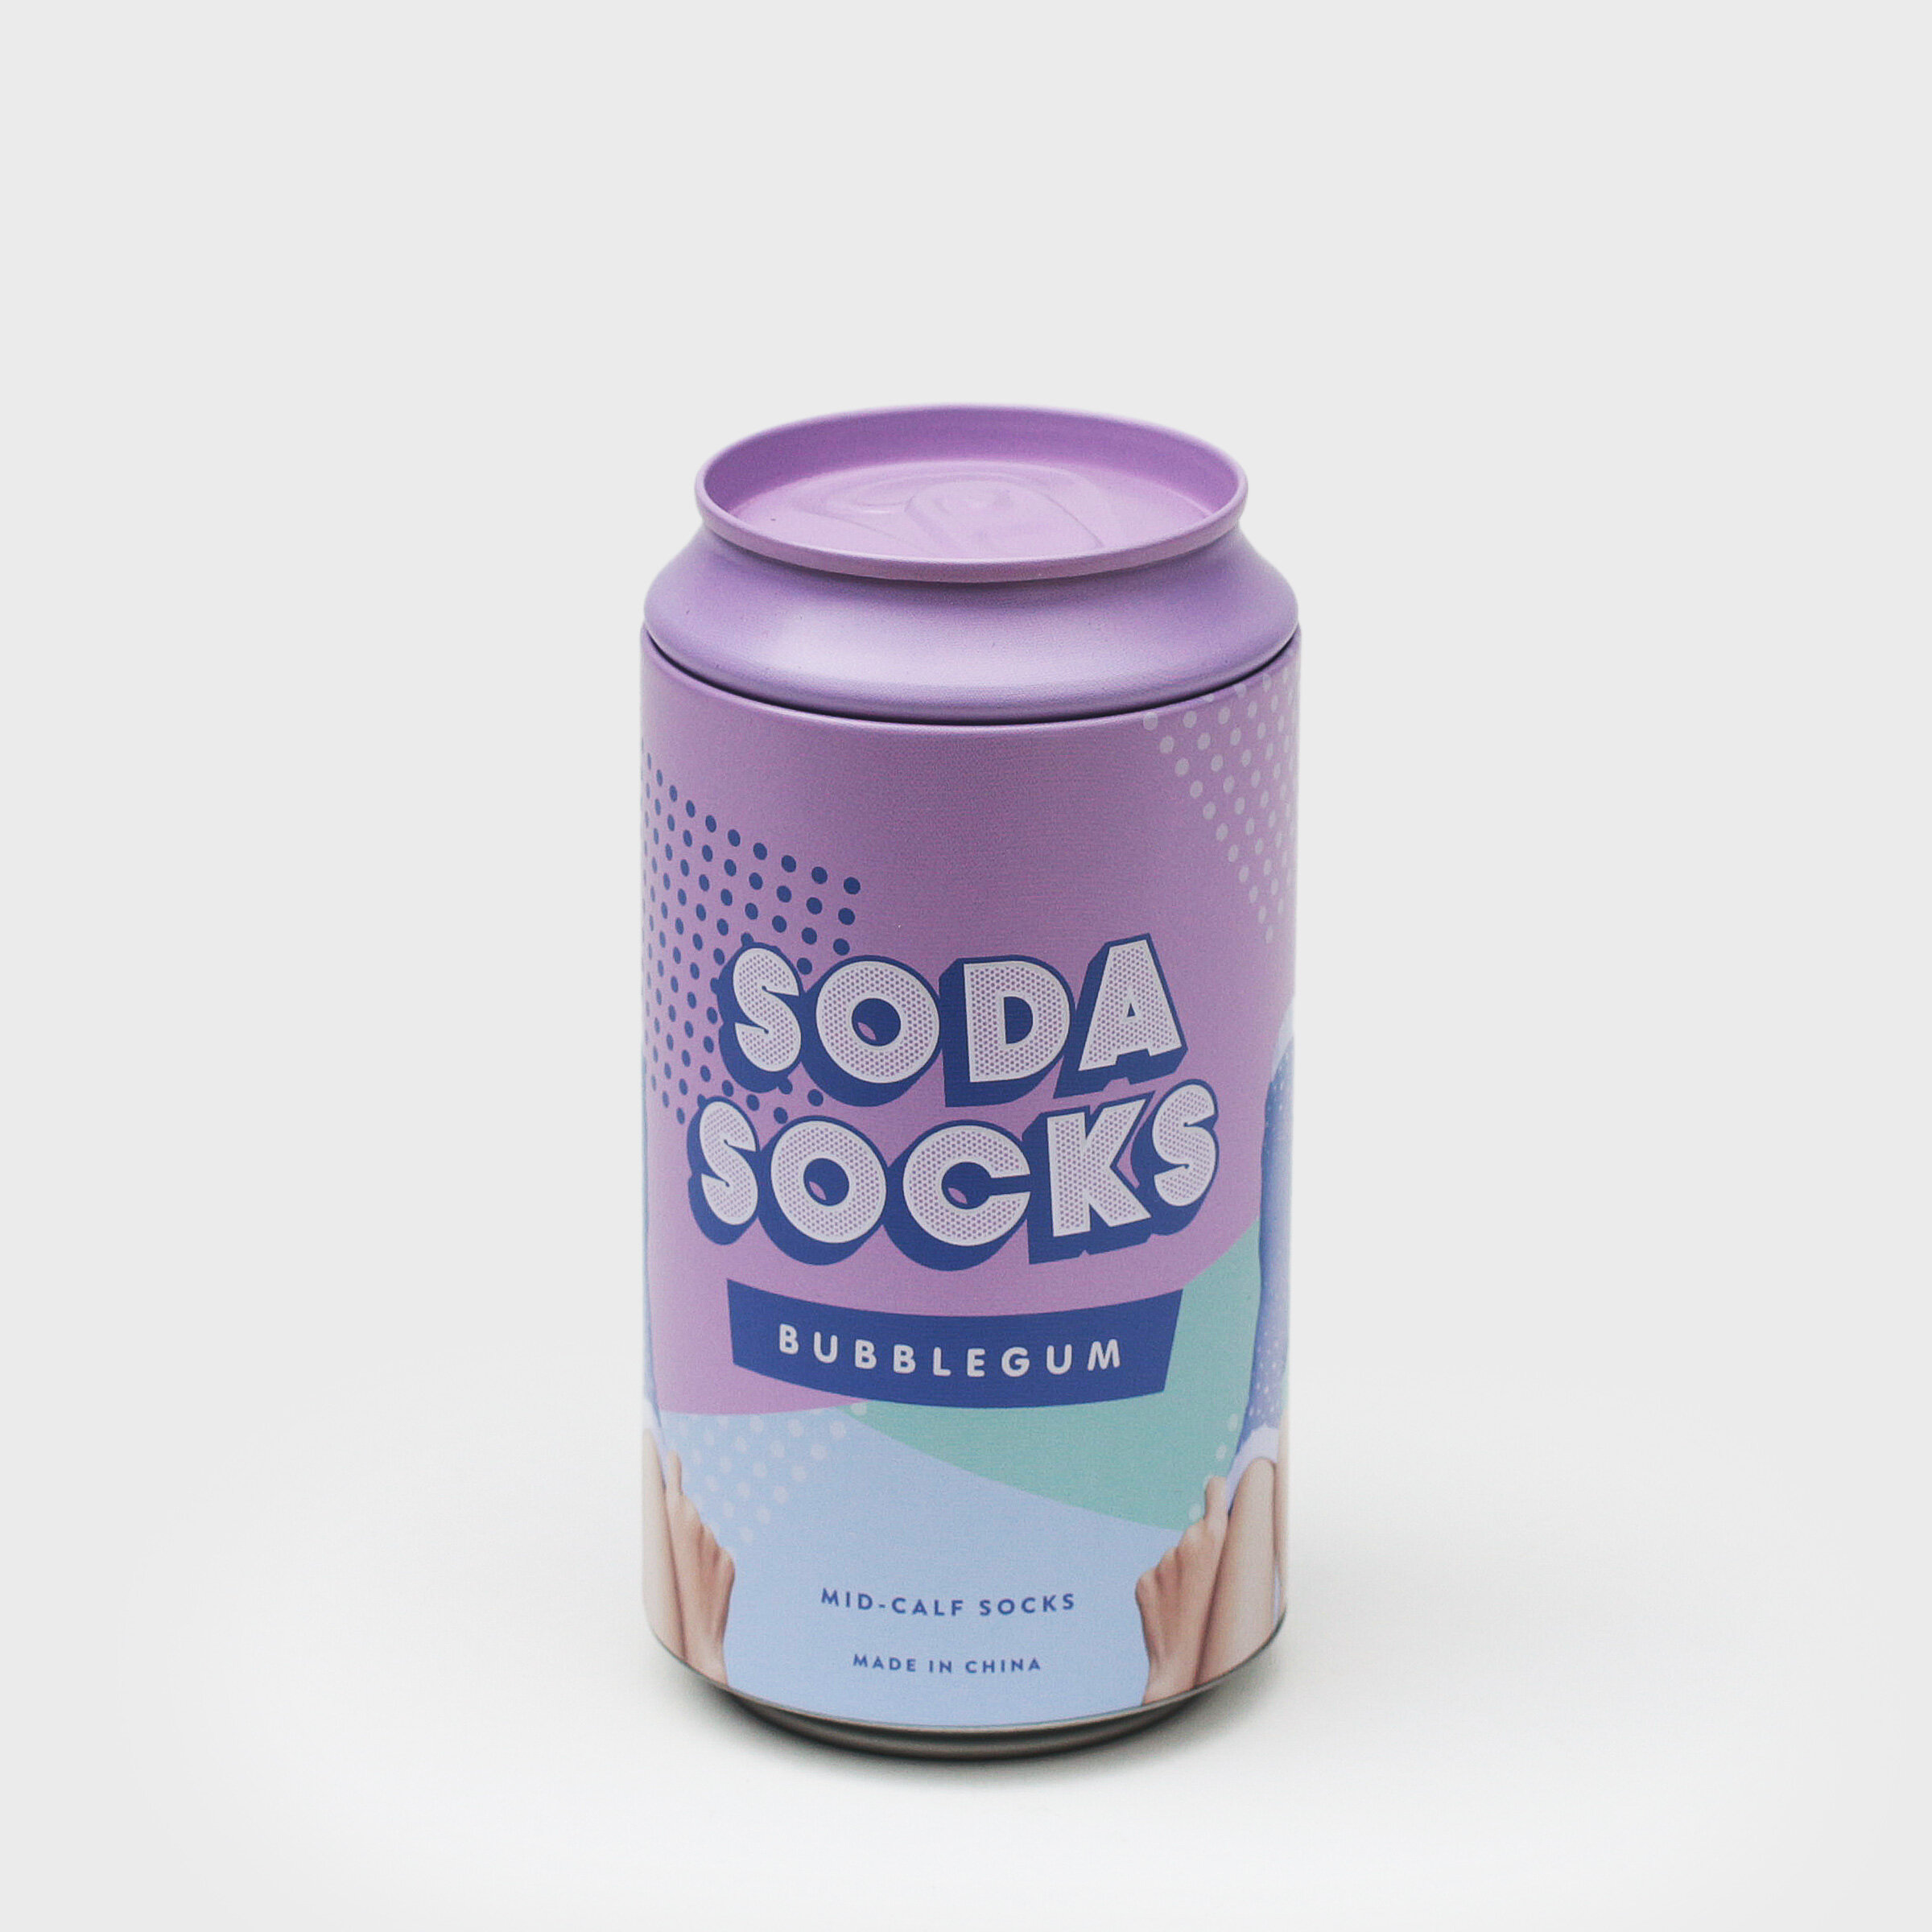 Bubblegum Soda Socks in a can